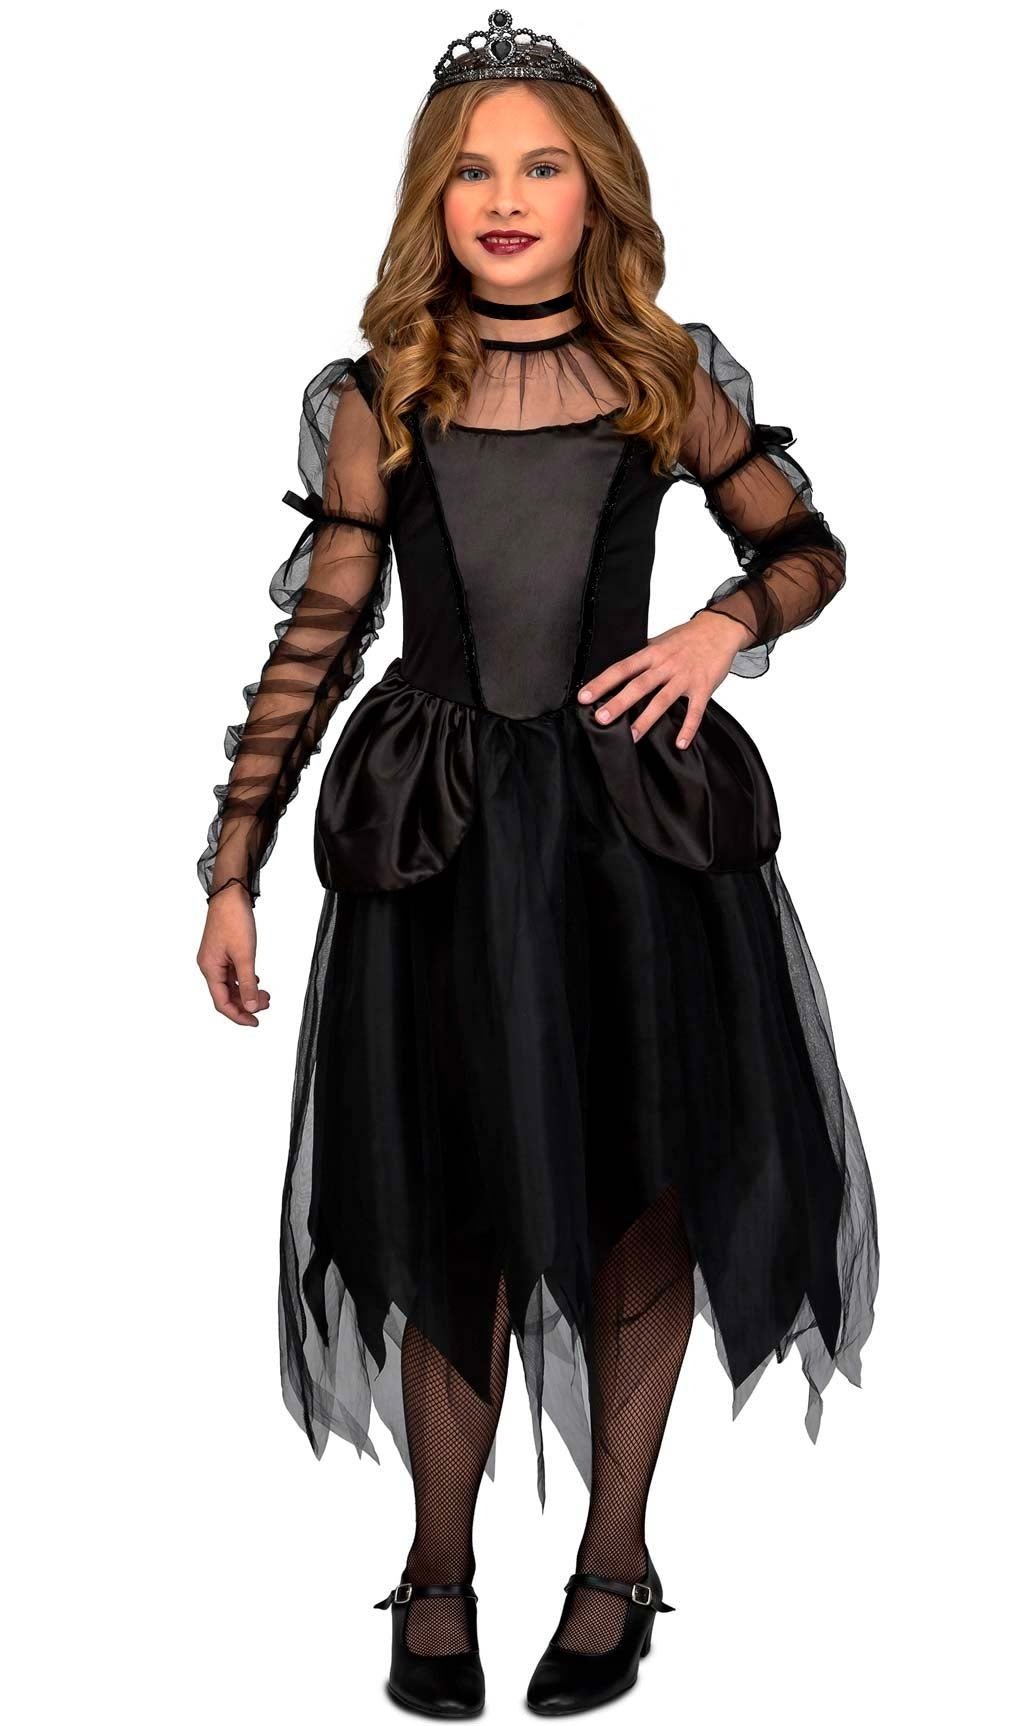 Acquista online Costume Mercoledì Gotico per donna